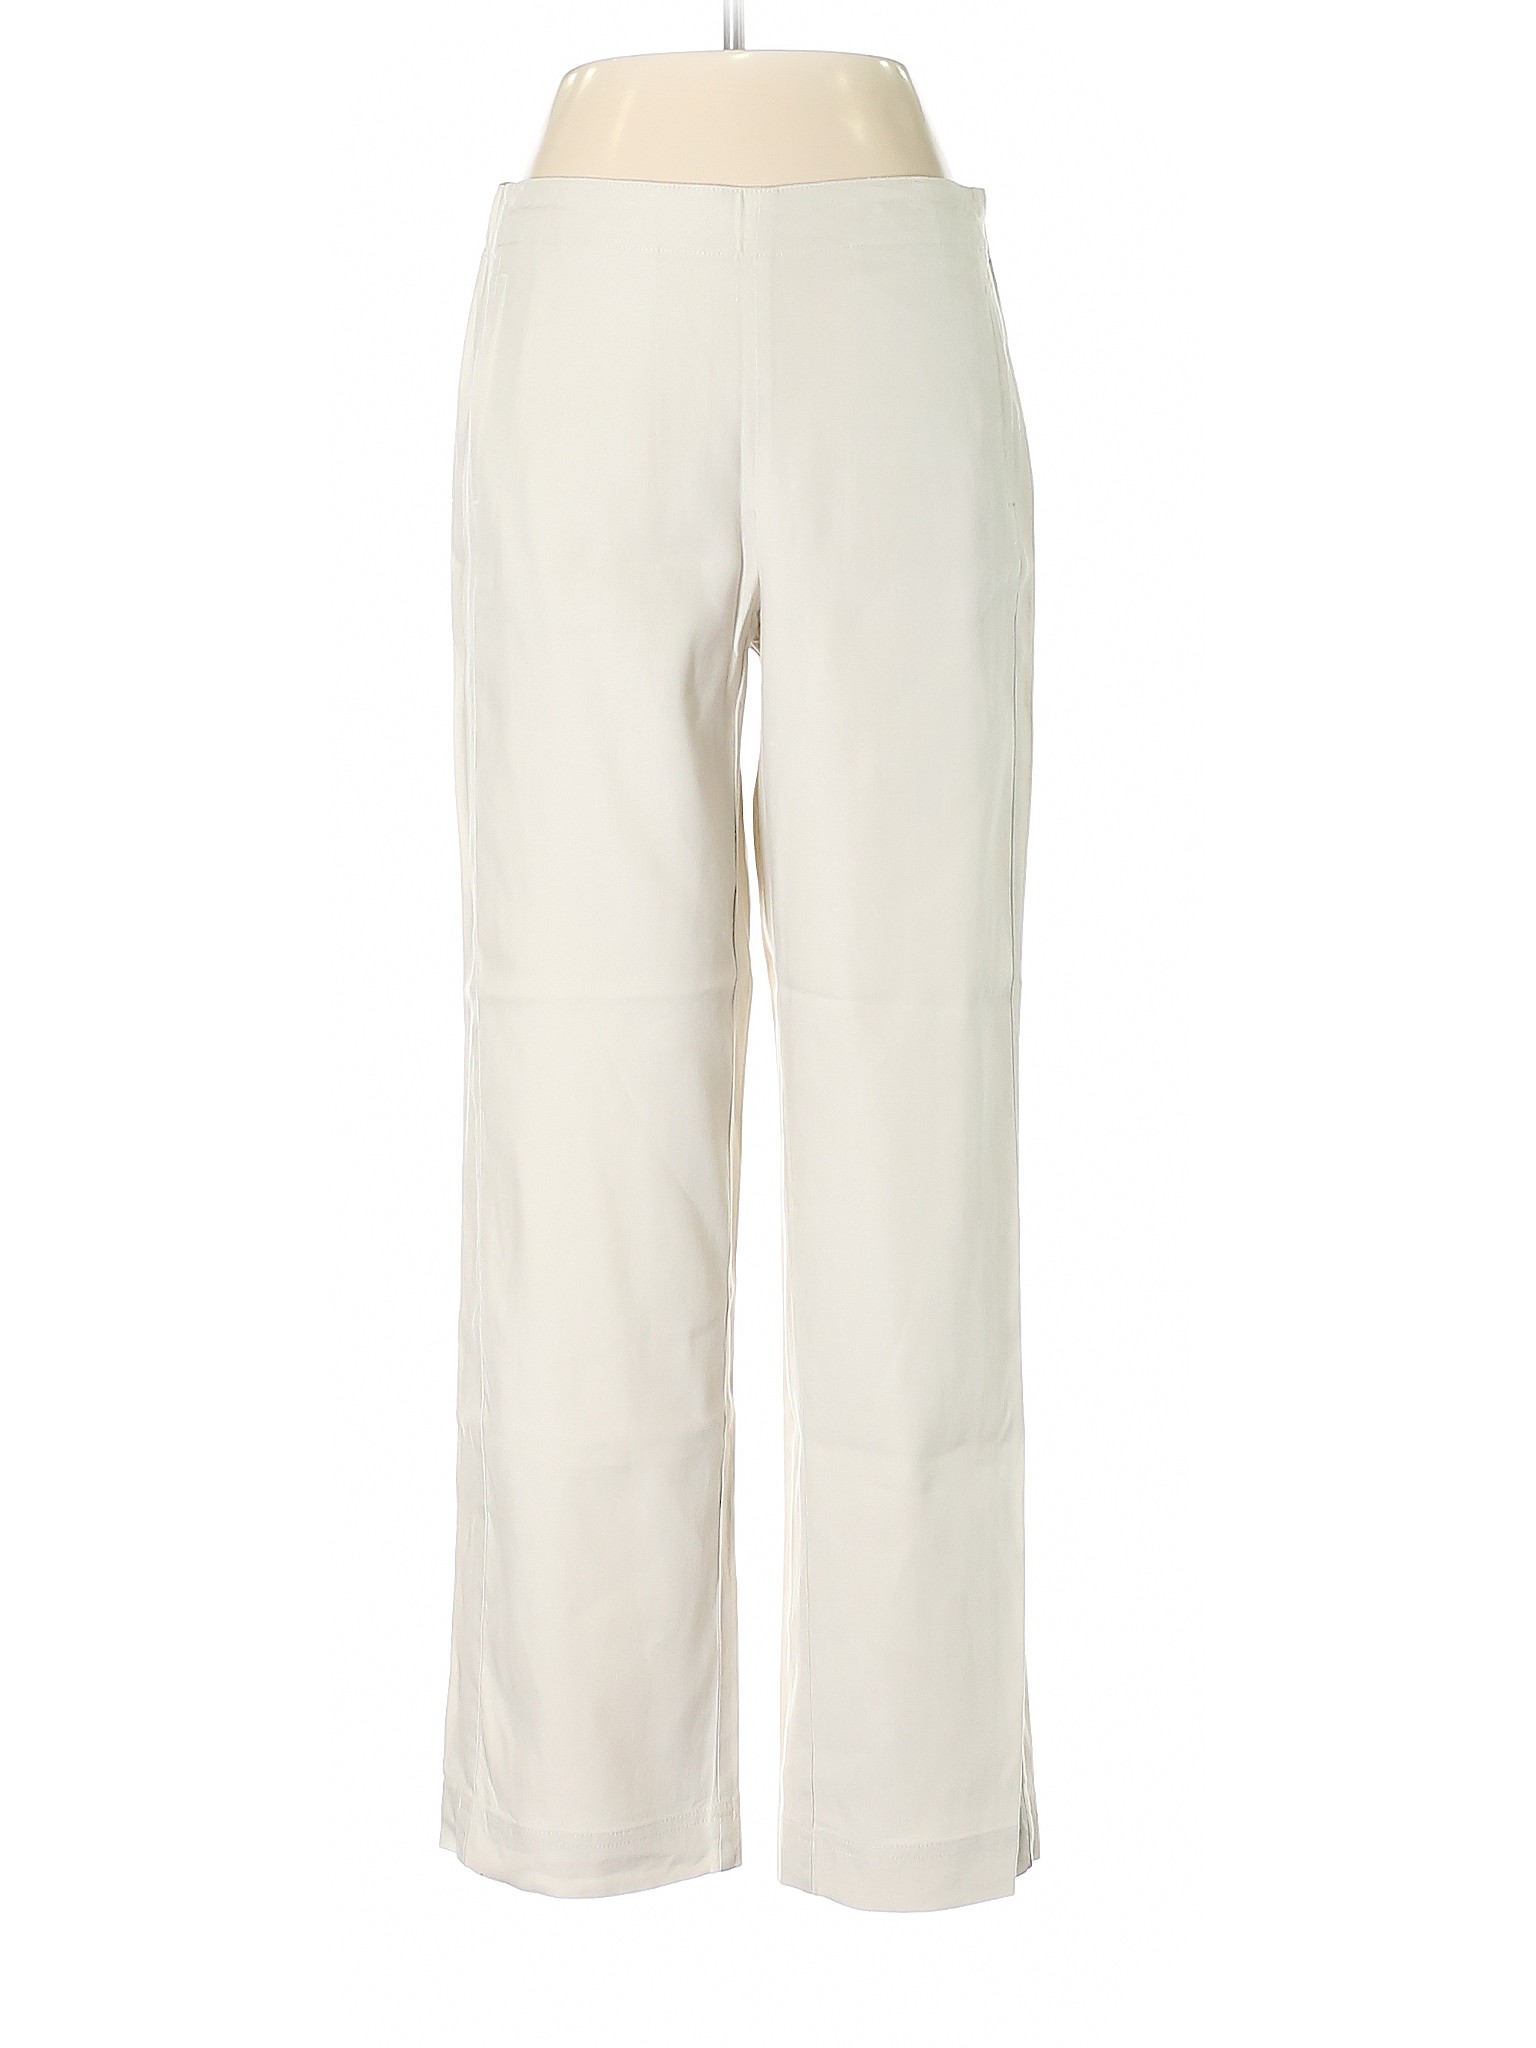 J.Jill Women White Linen Pants 4 | eBay